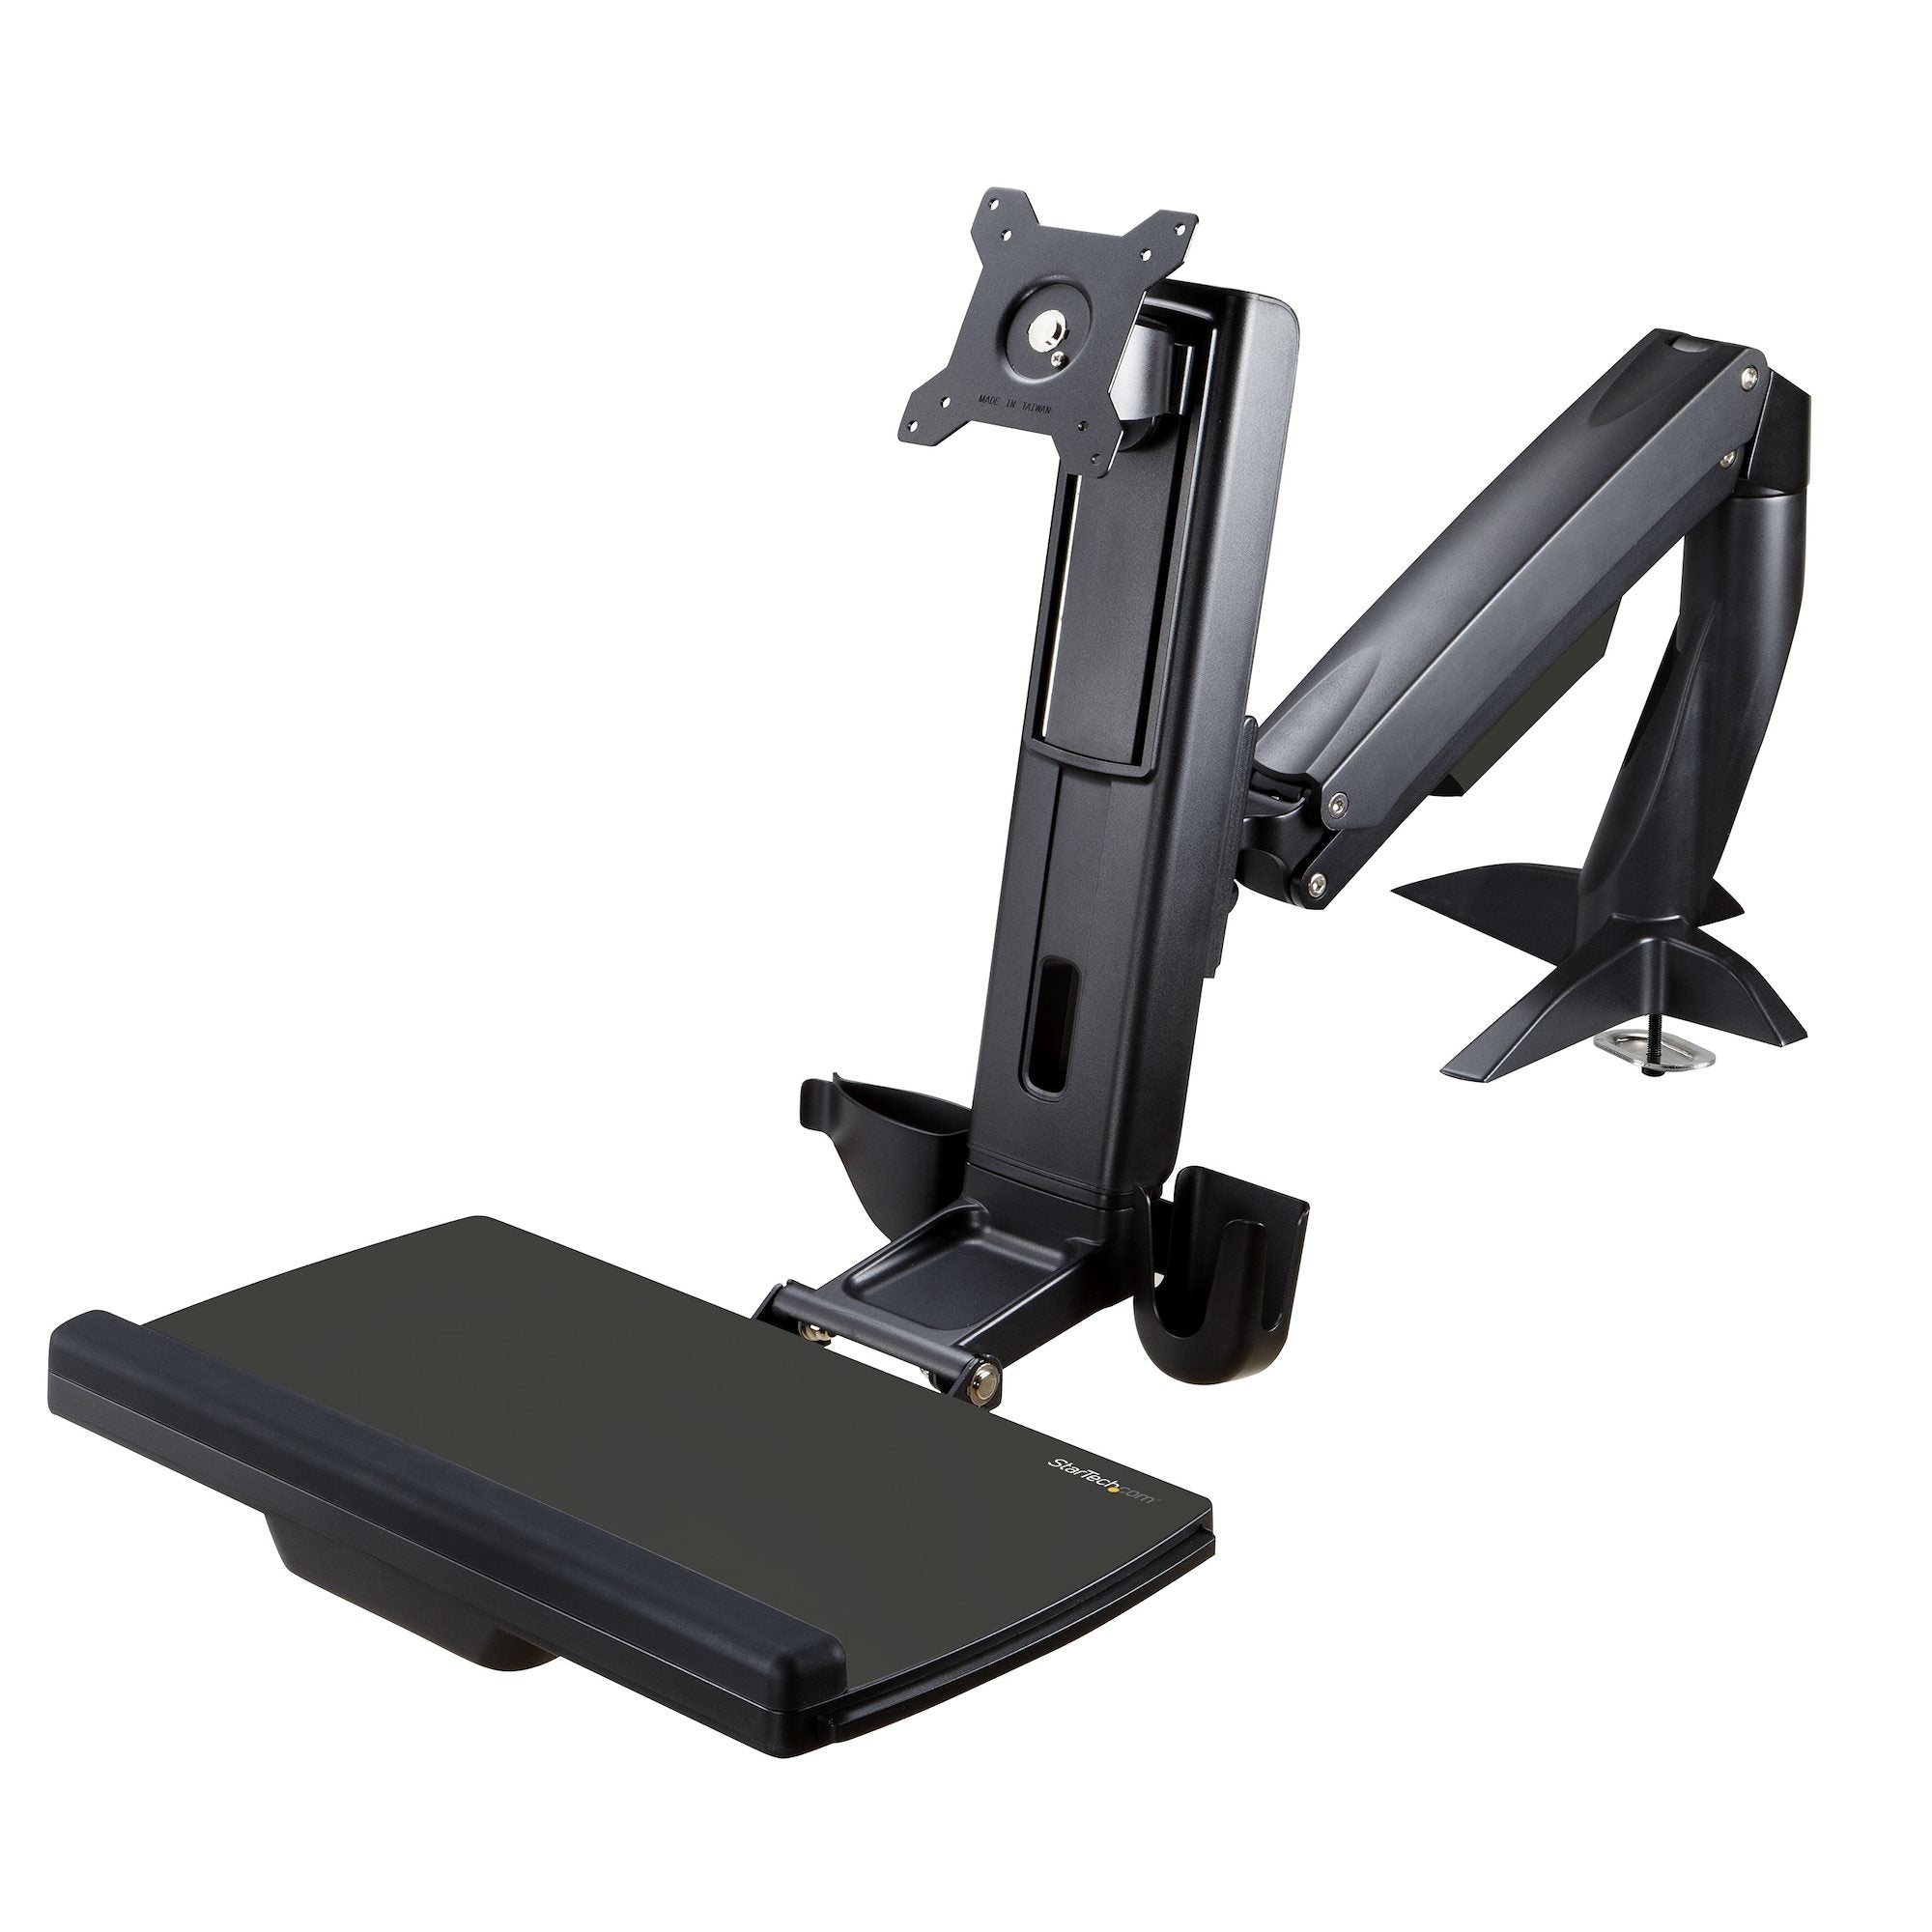 Sit Stand Monitor Arm - Desk Mount Adjustable Sit-Stand Workstation Arm for Single 34" VESA Mount Display - Ergonomic Articulating Standing Desk Converter with Keyboard Tray